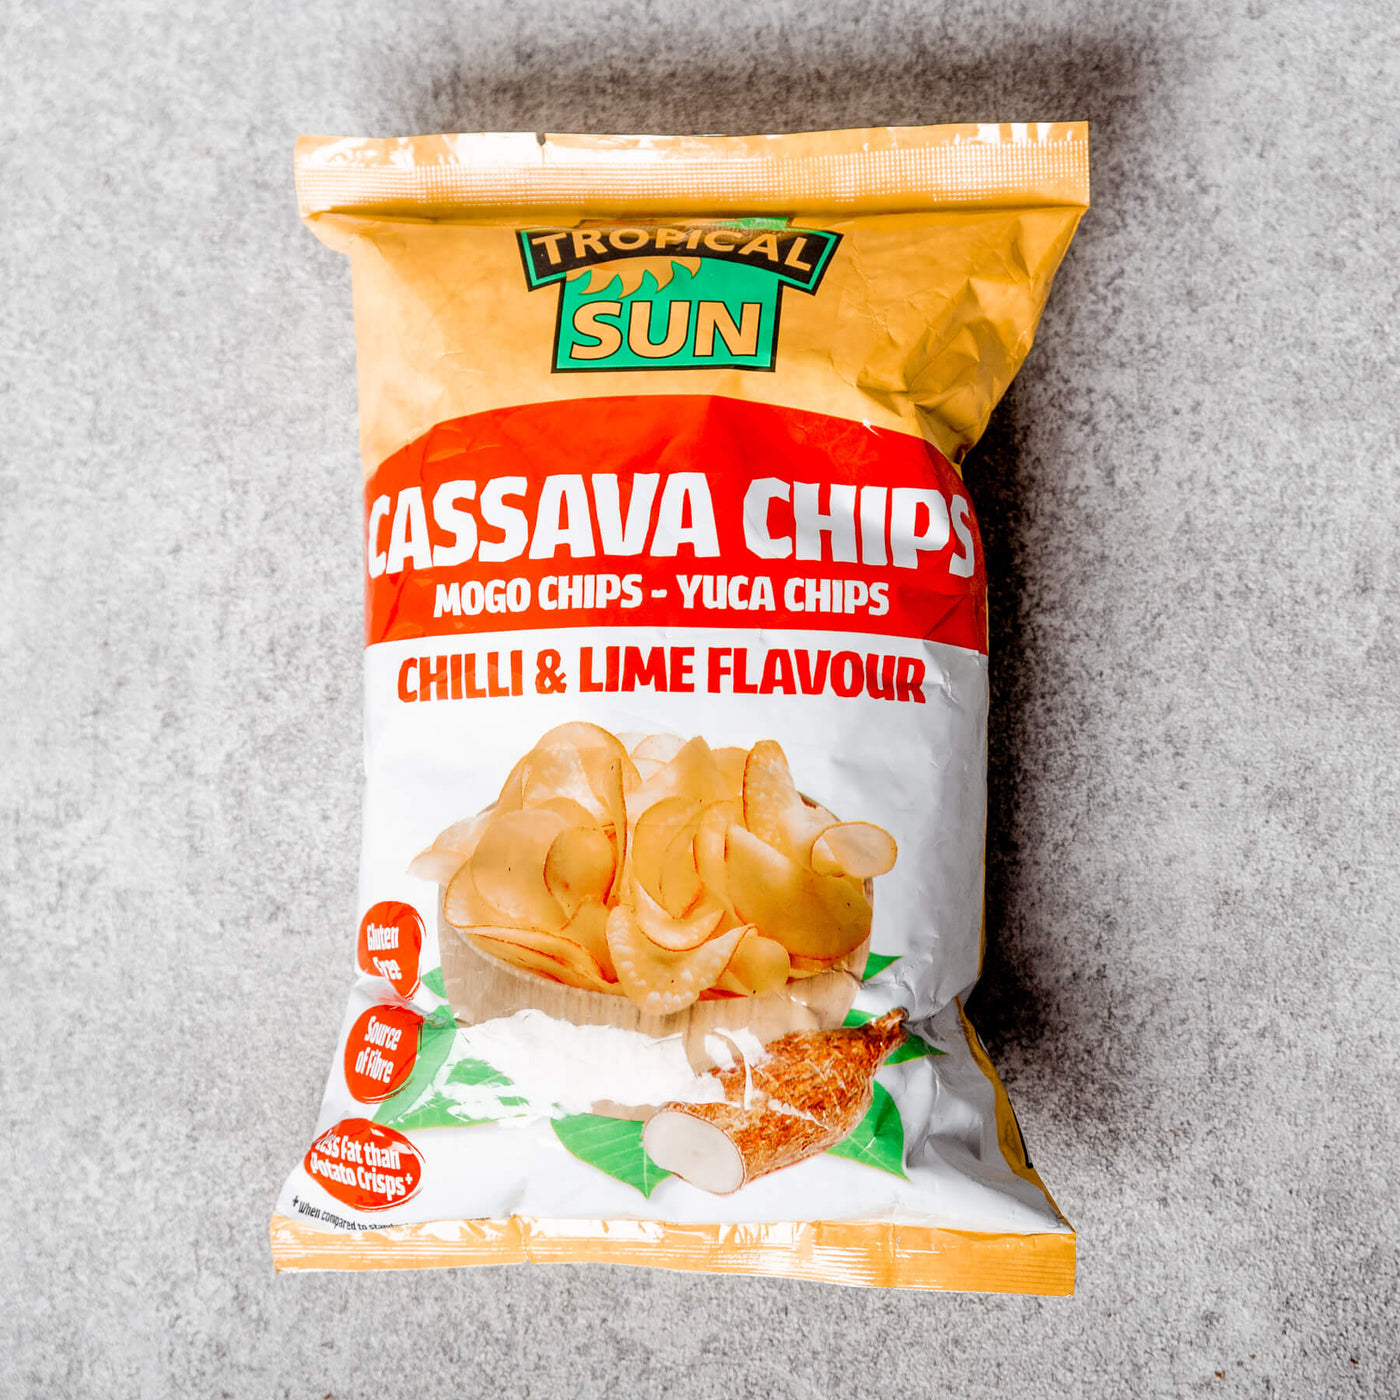 Tropical Sun - Cassava Chips Chili & Lime Flavour